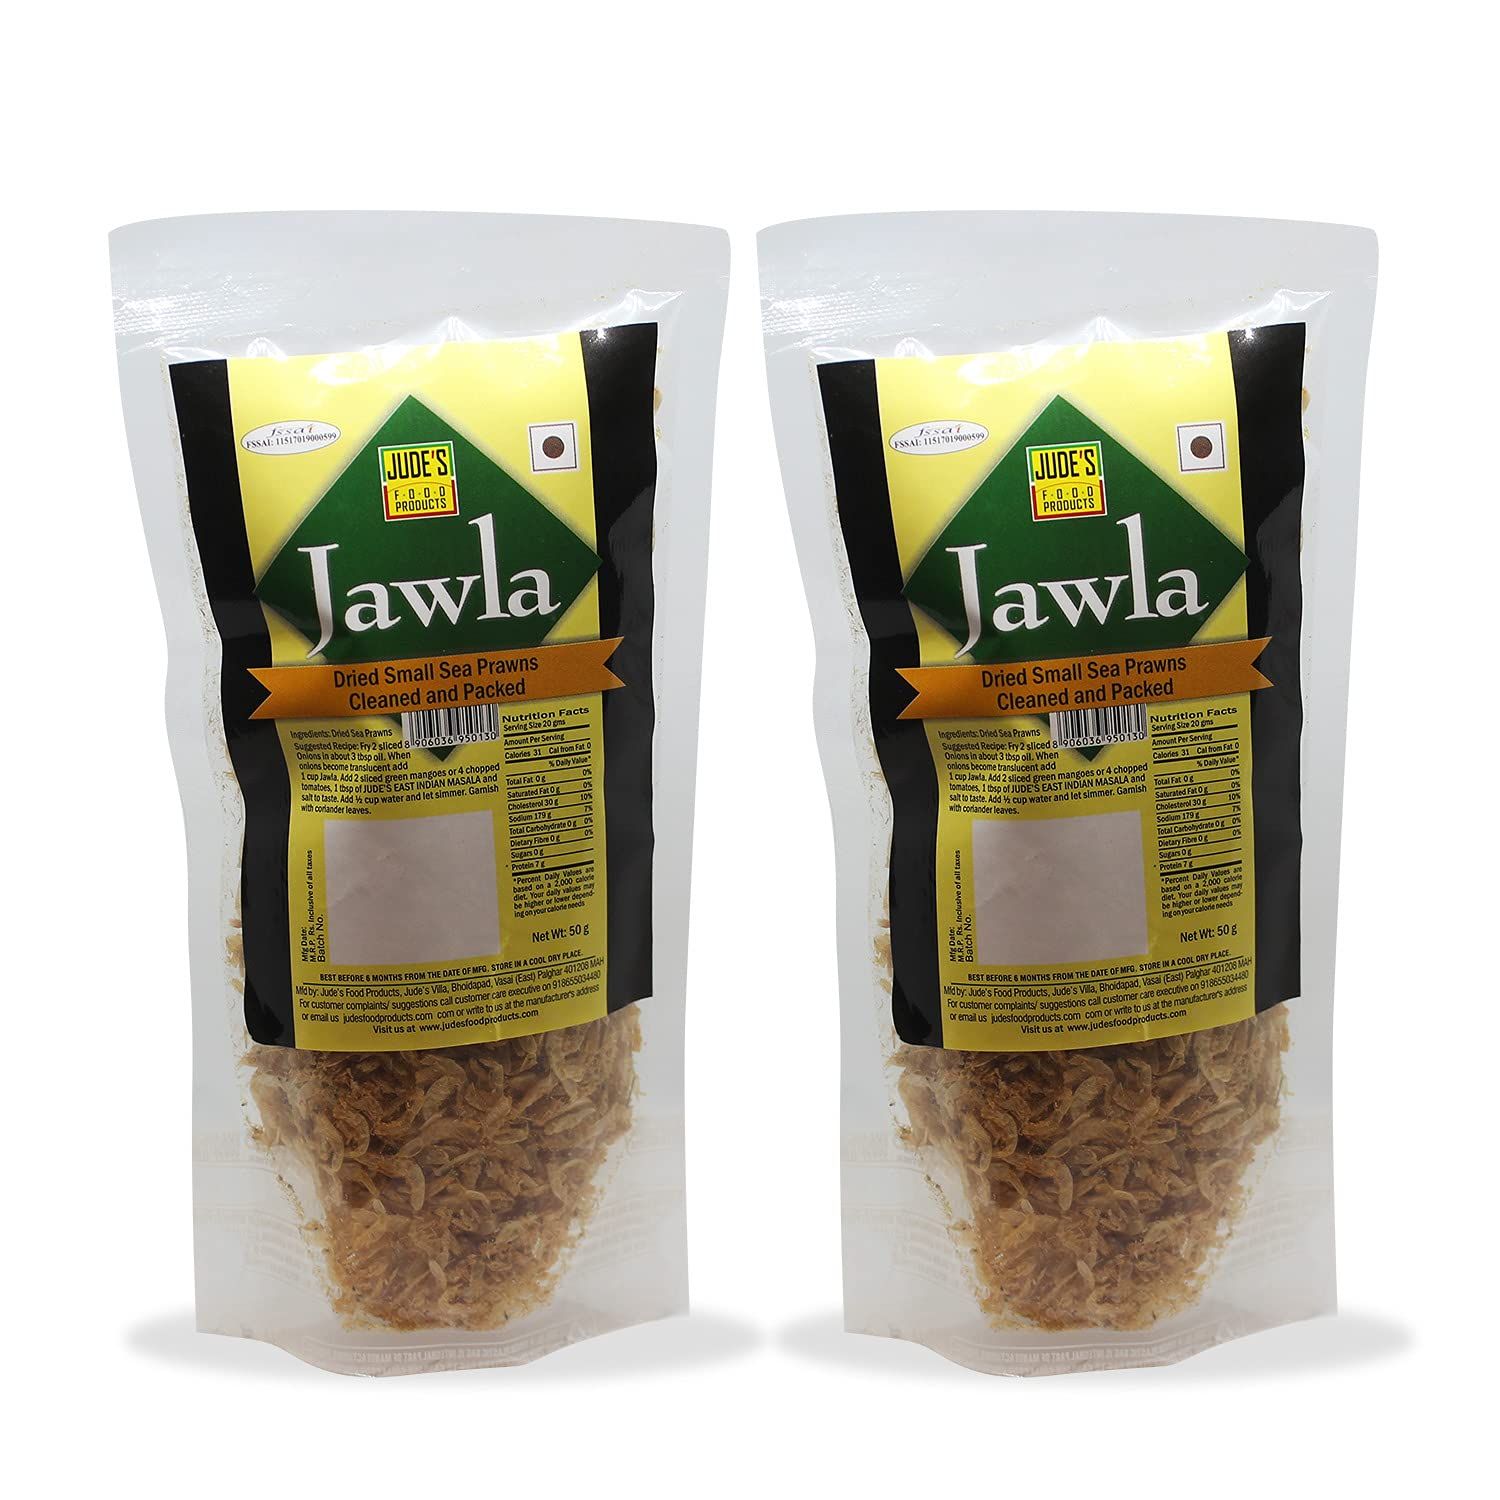 Jude's Food Products Jawla Dried Small Sea Prawns Image